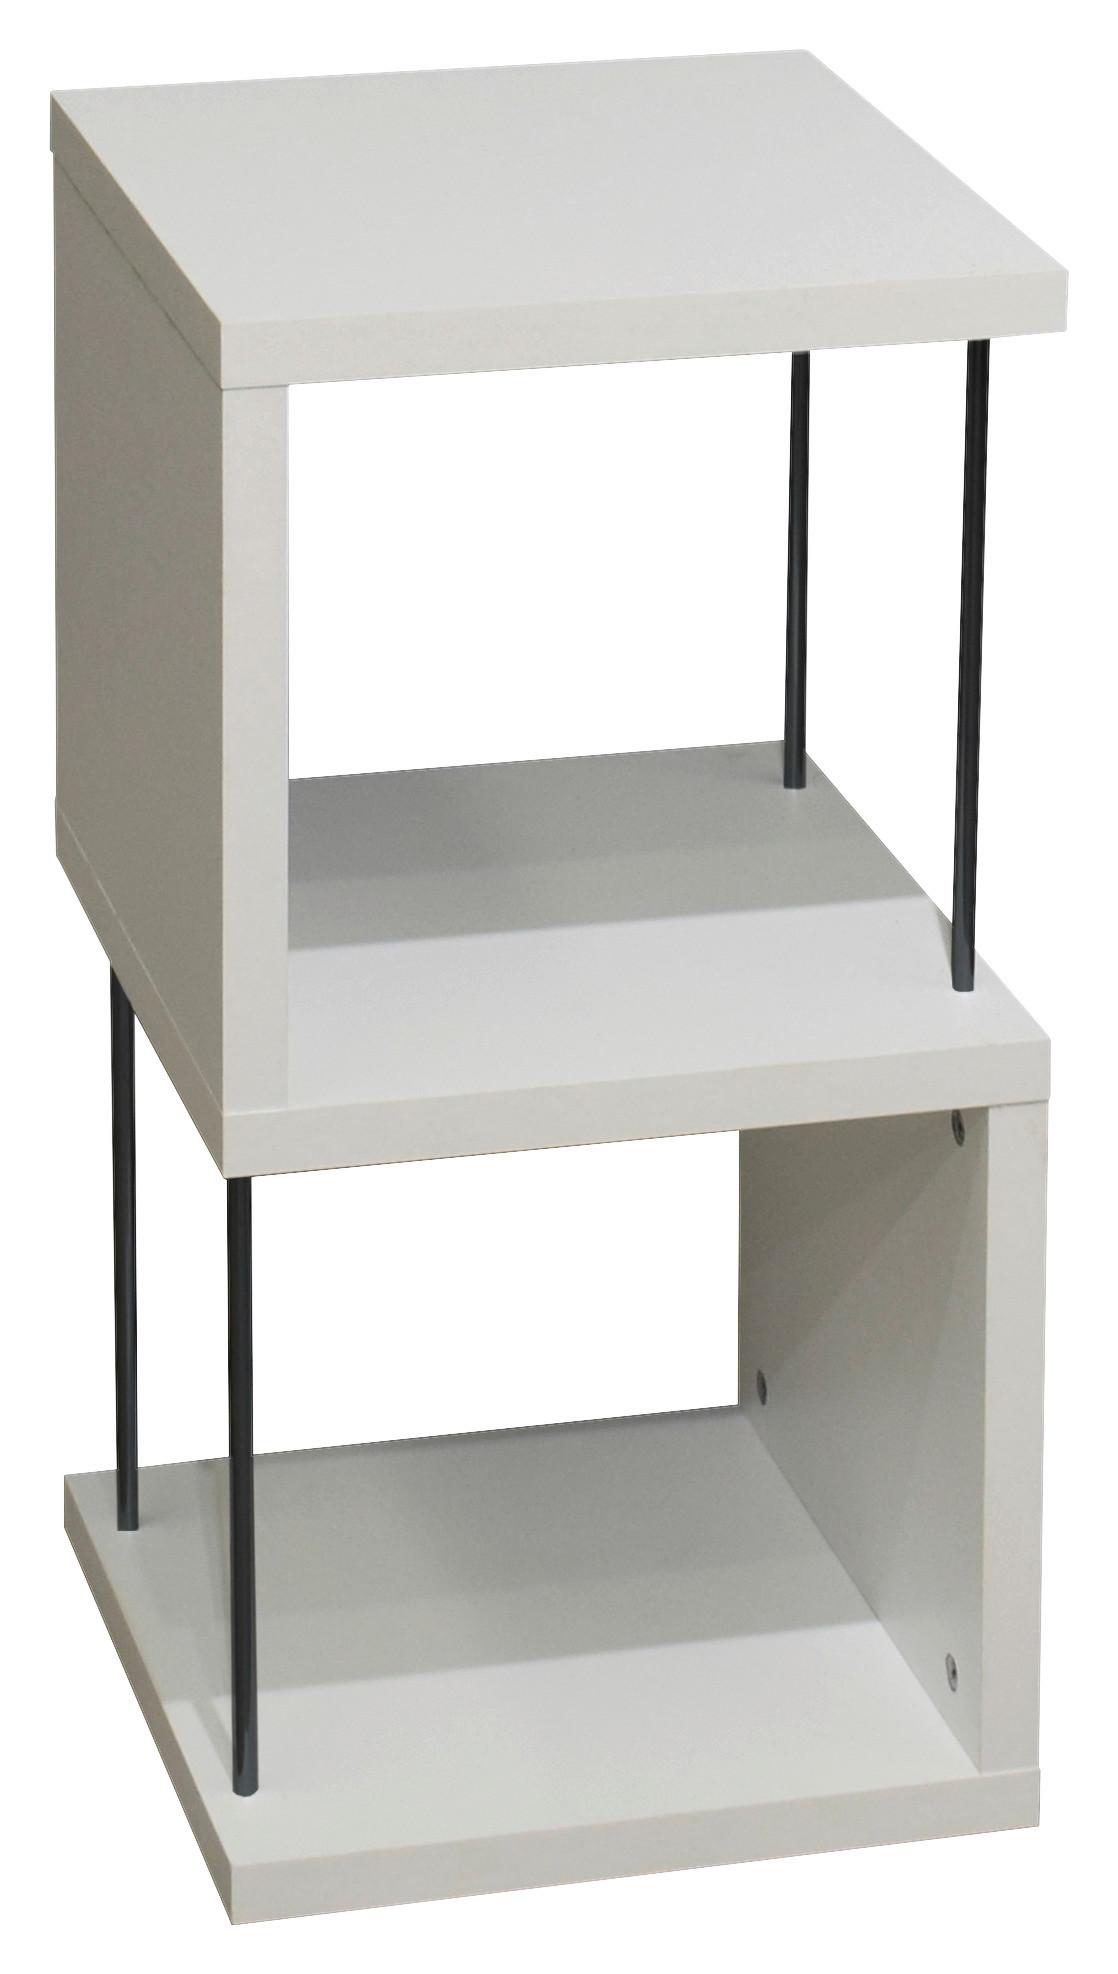 Beistelltisch in Weiss - Weiss/Schwarz, Modern, Holzwerkstoff/Metall (33/65/33cm) - Modern Living